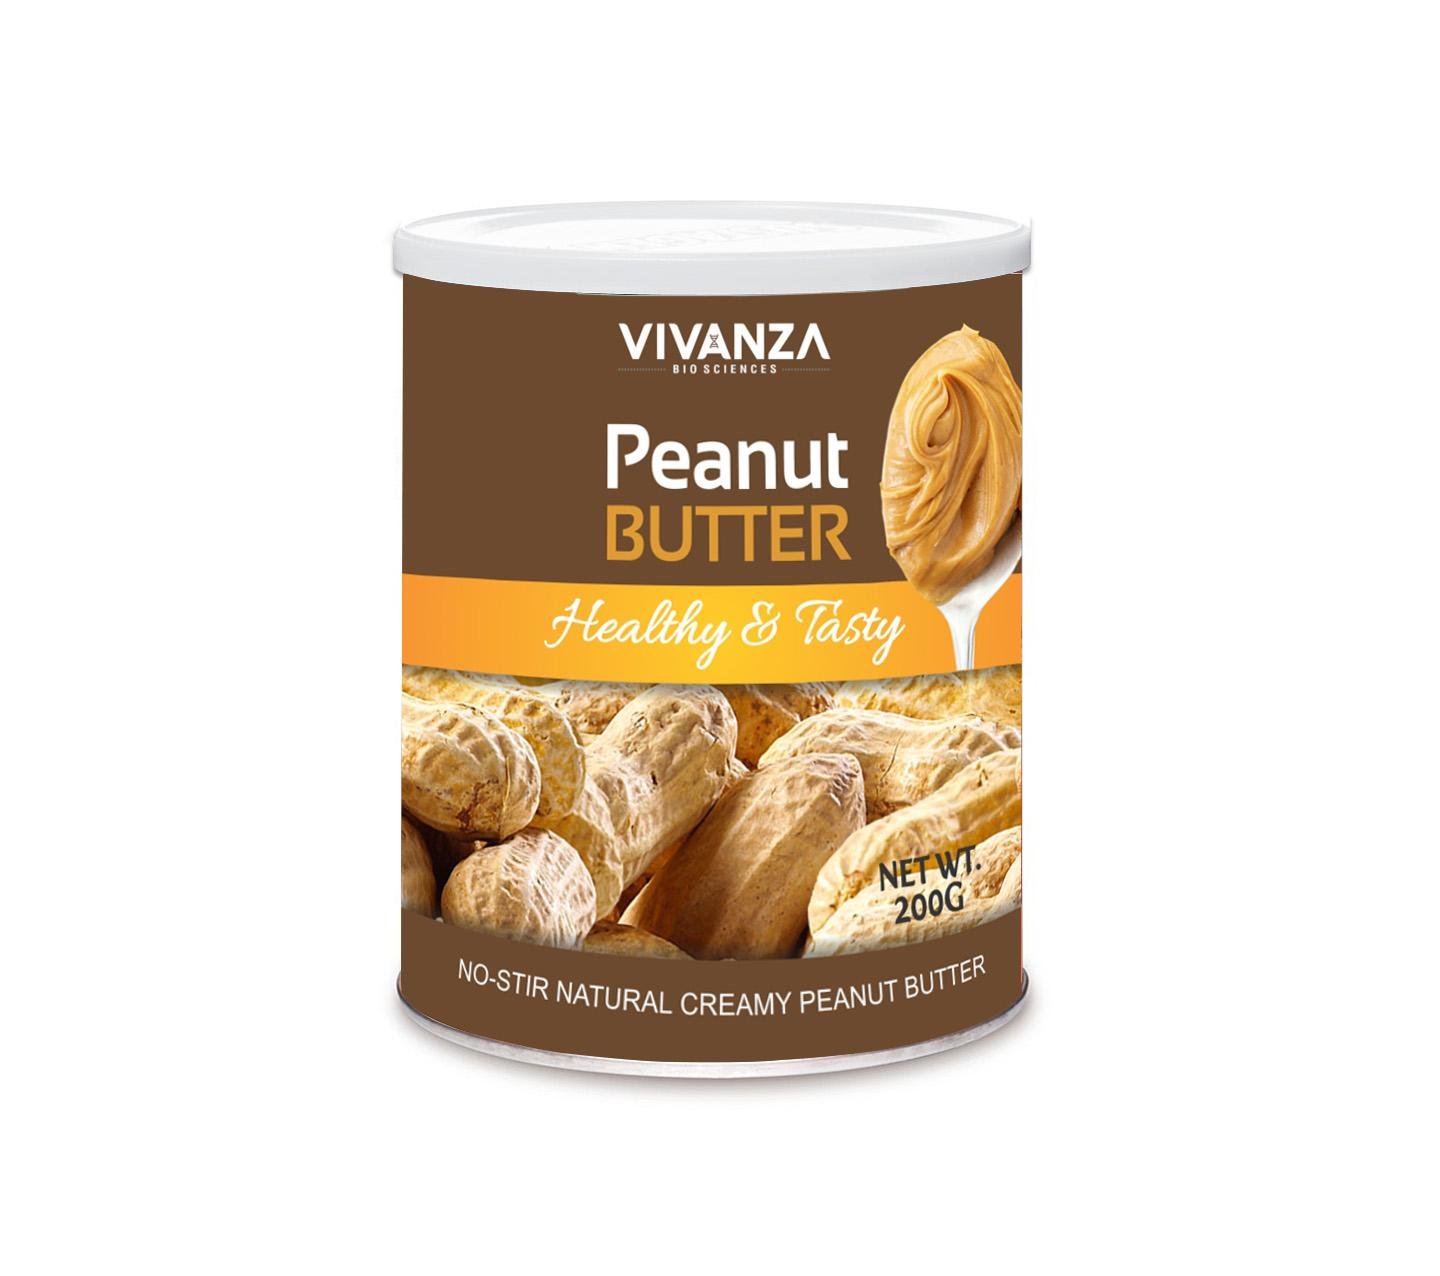 Vivanza Peanut Butter